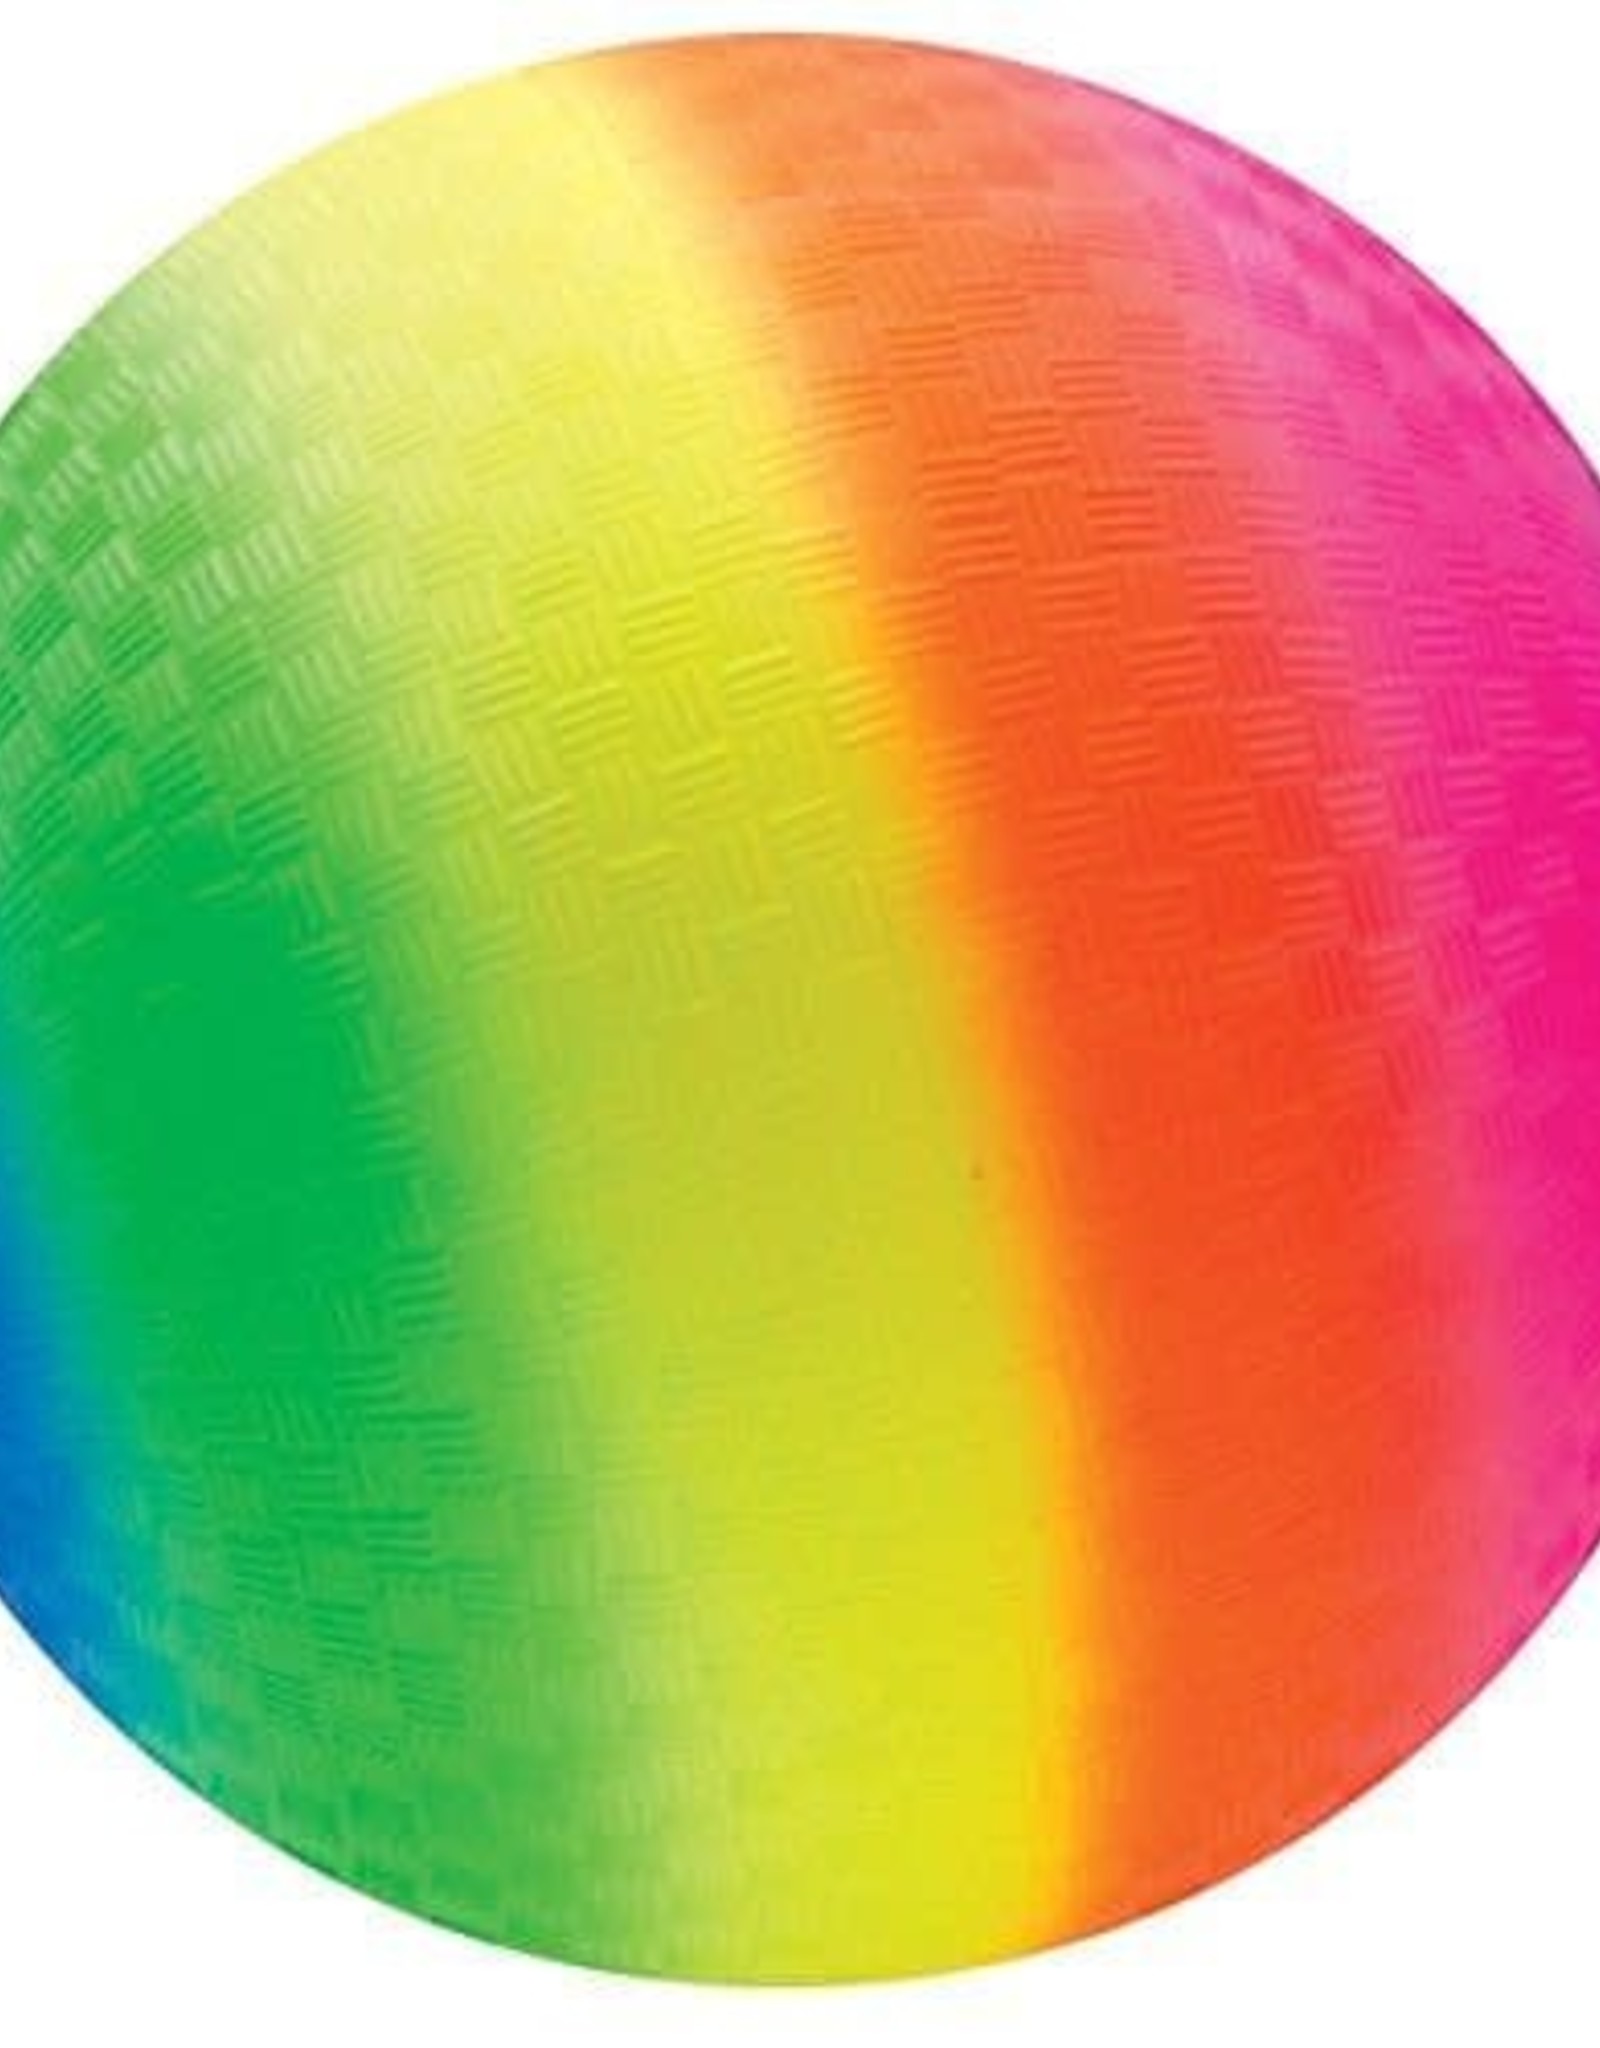 Schylling Rainbow Ball  9"